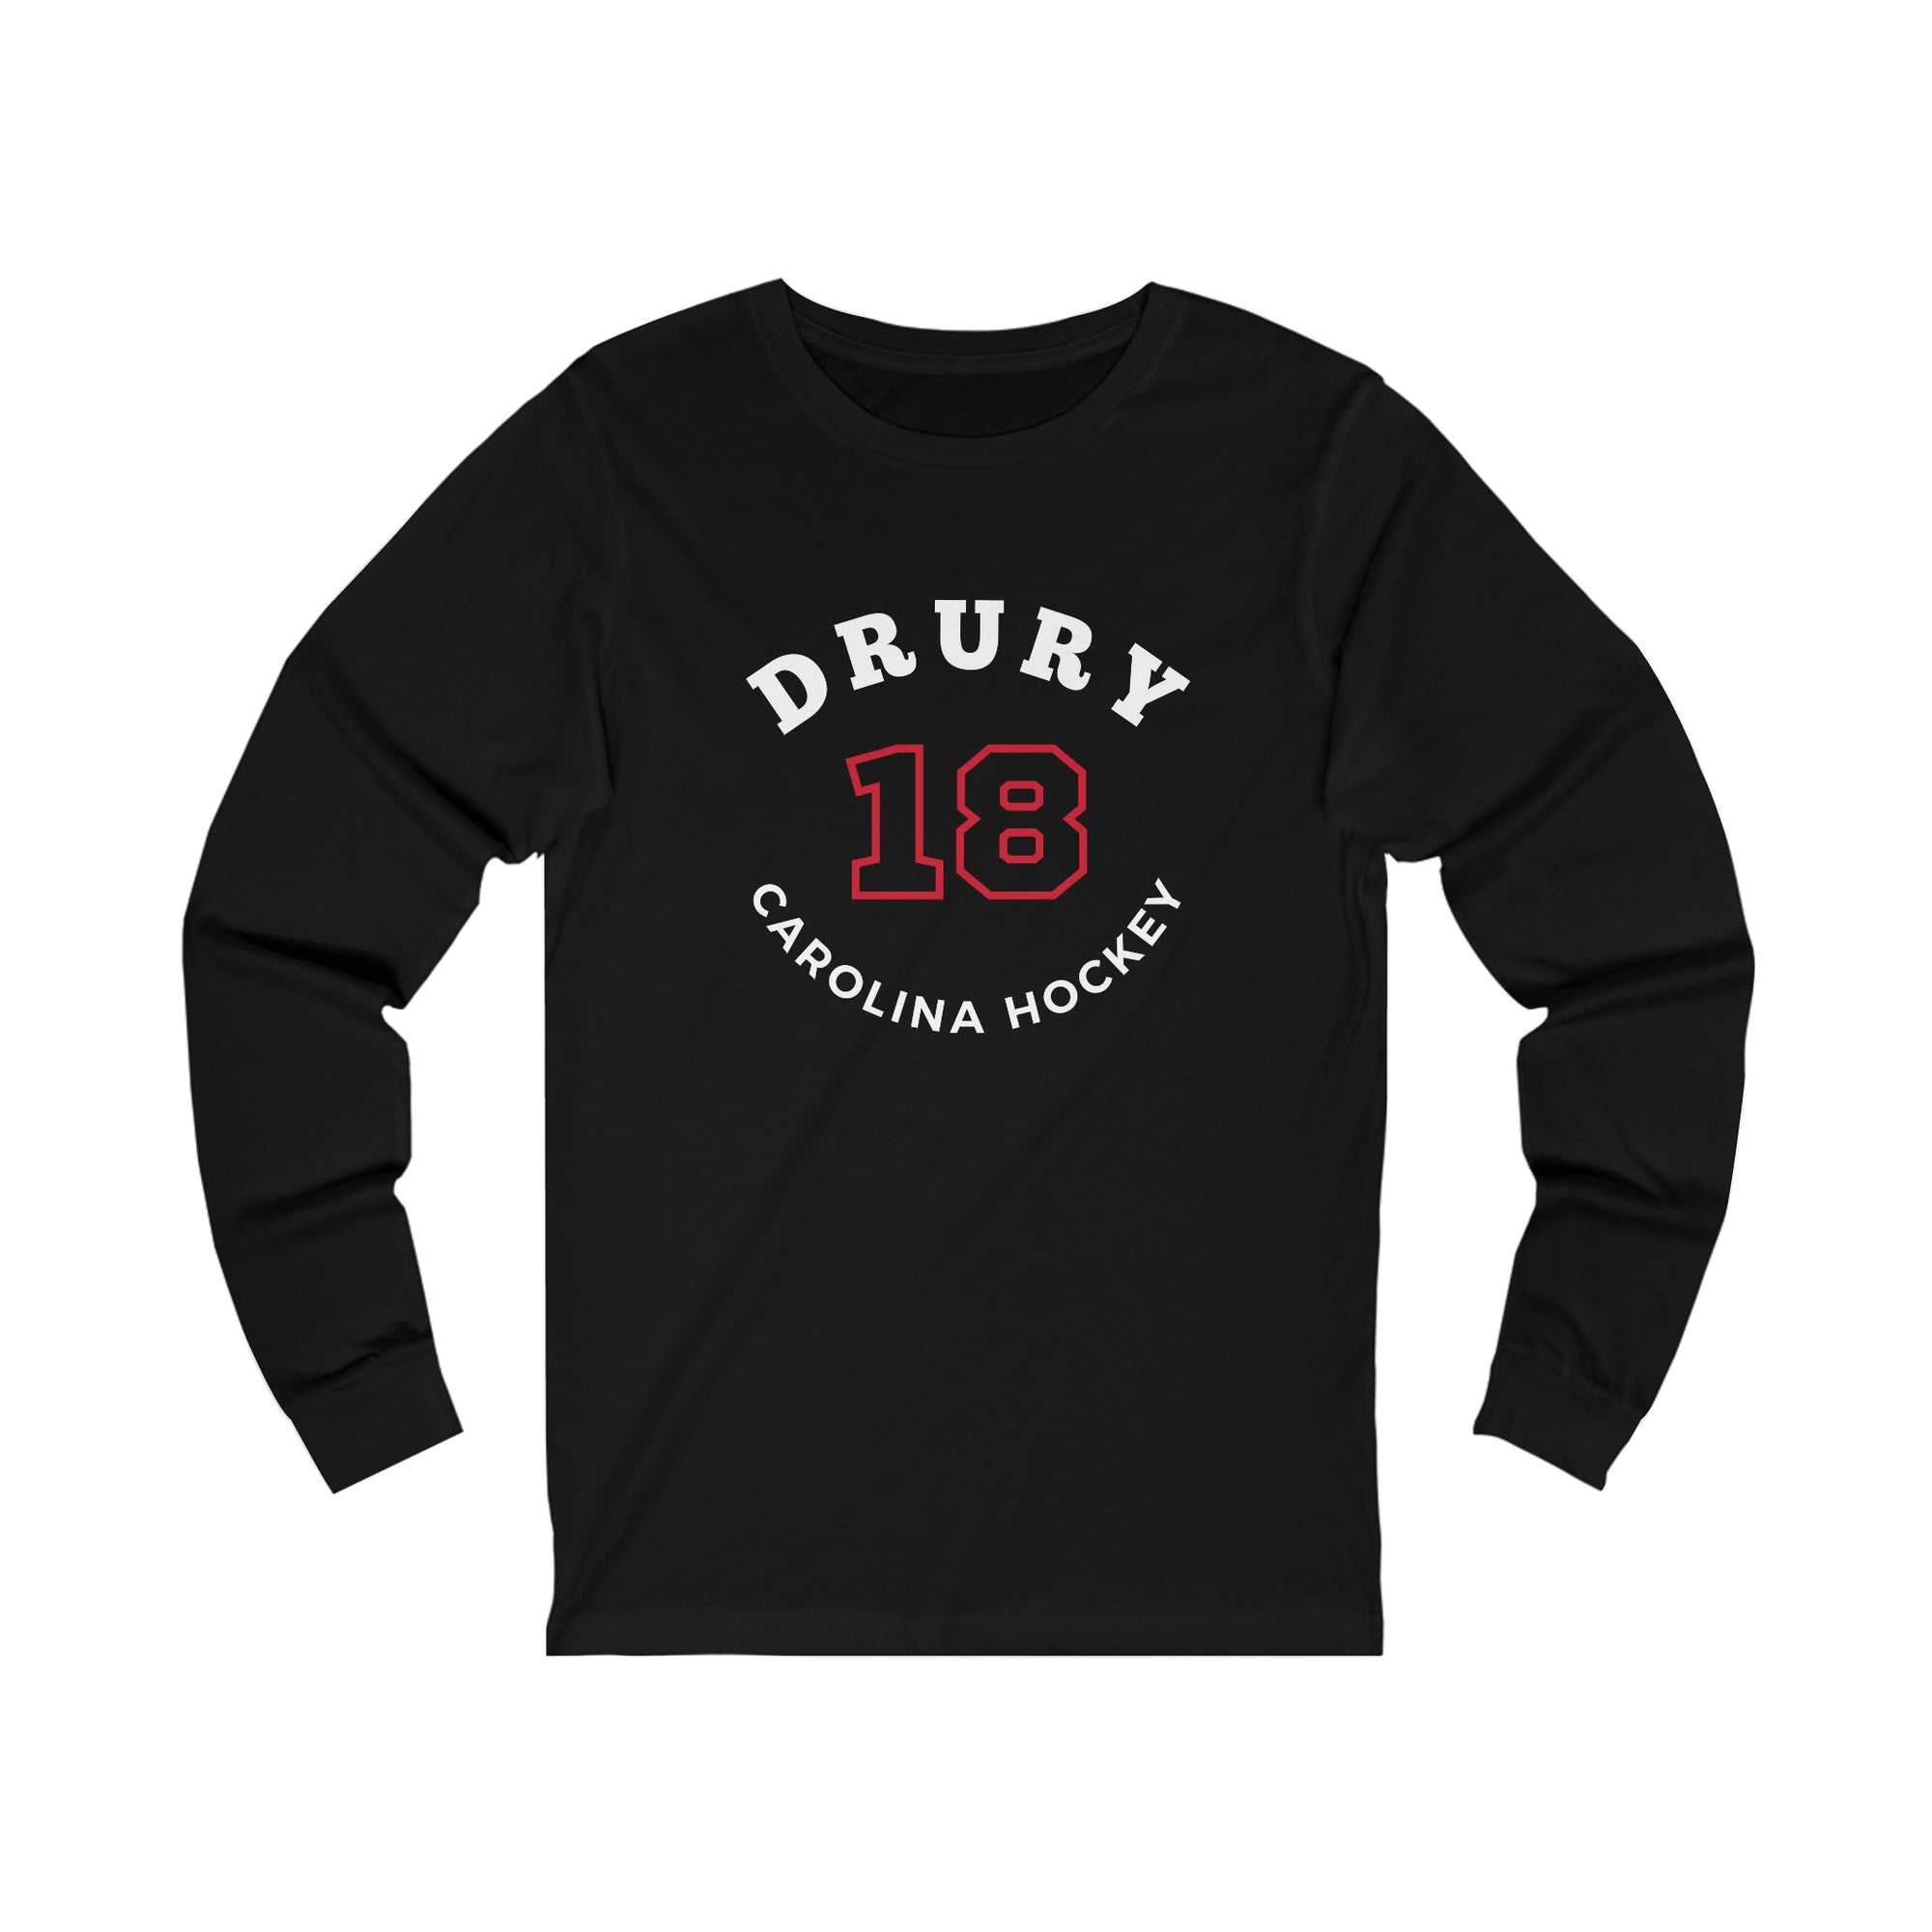 Drury 18 Carolina Hockey Number Arch Design Unisex Jersey Long Sleeve Shirt